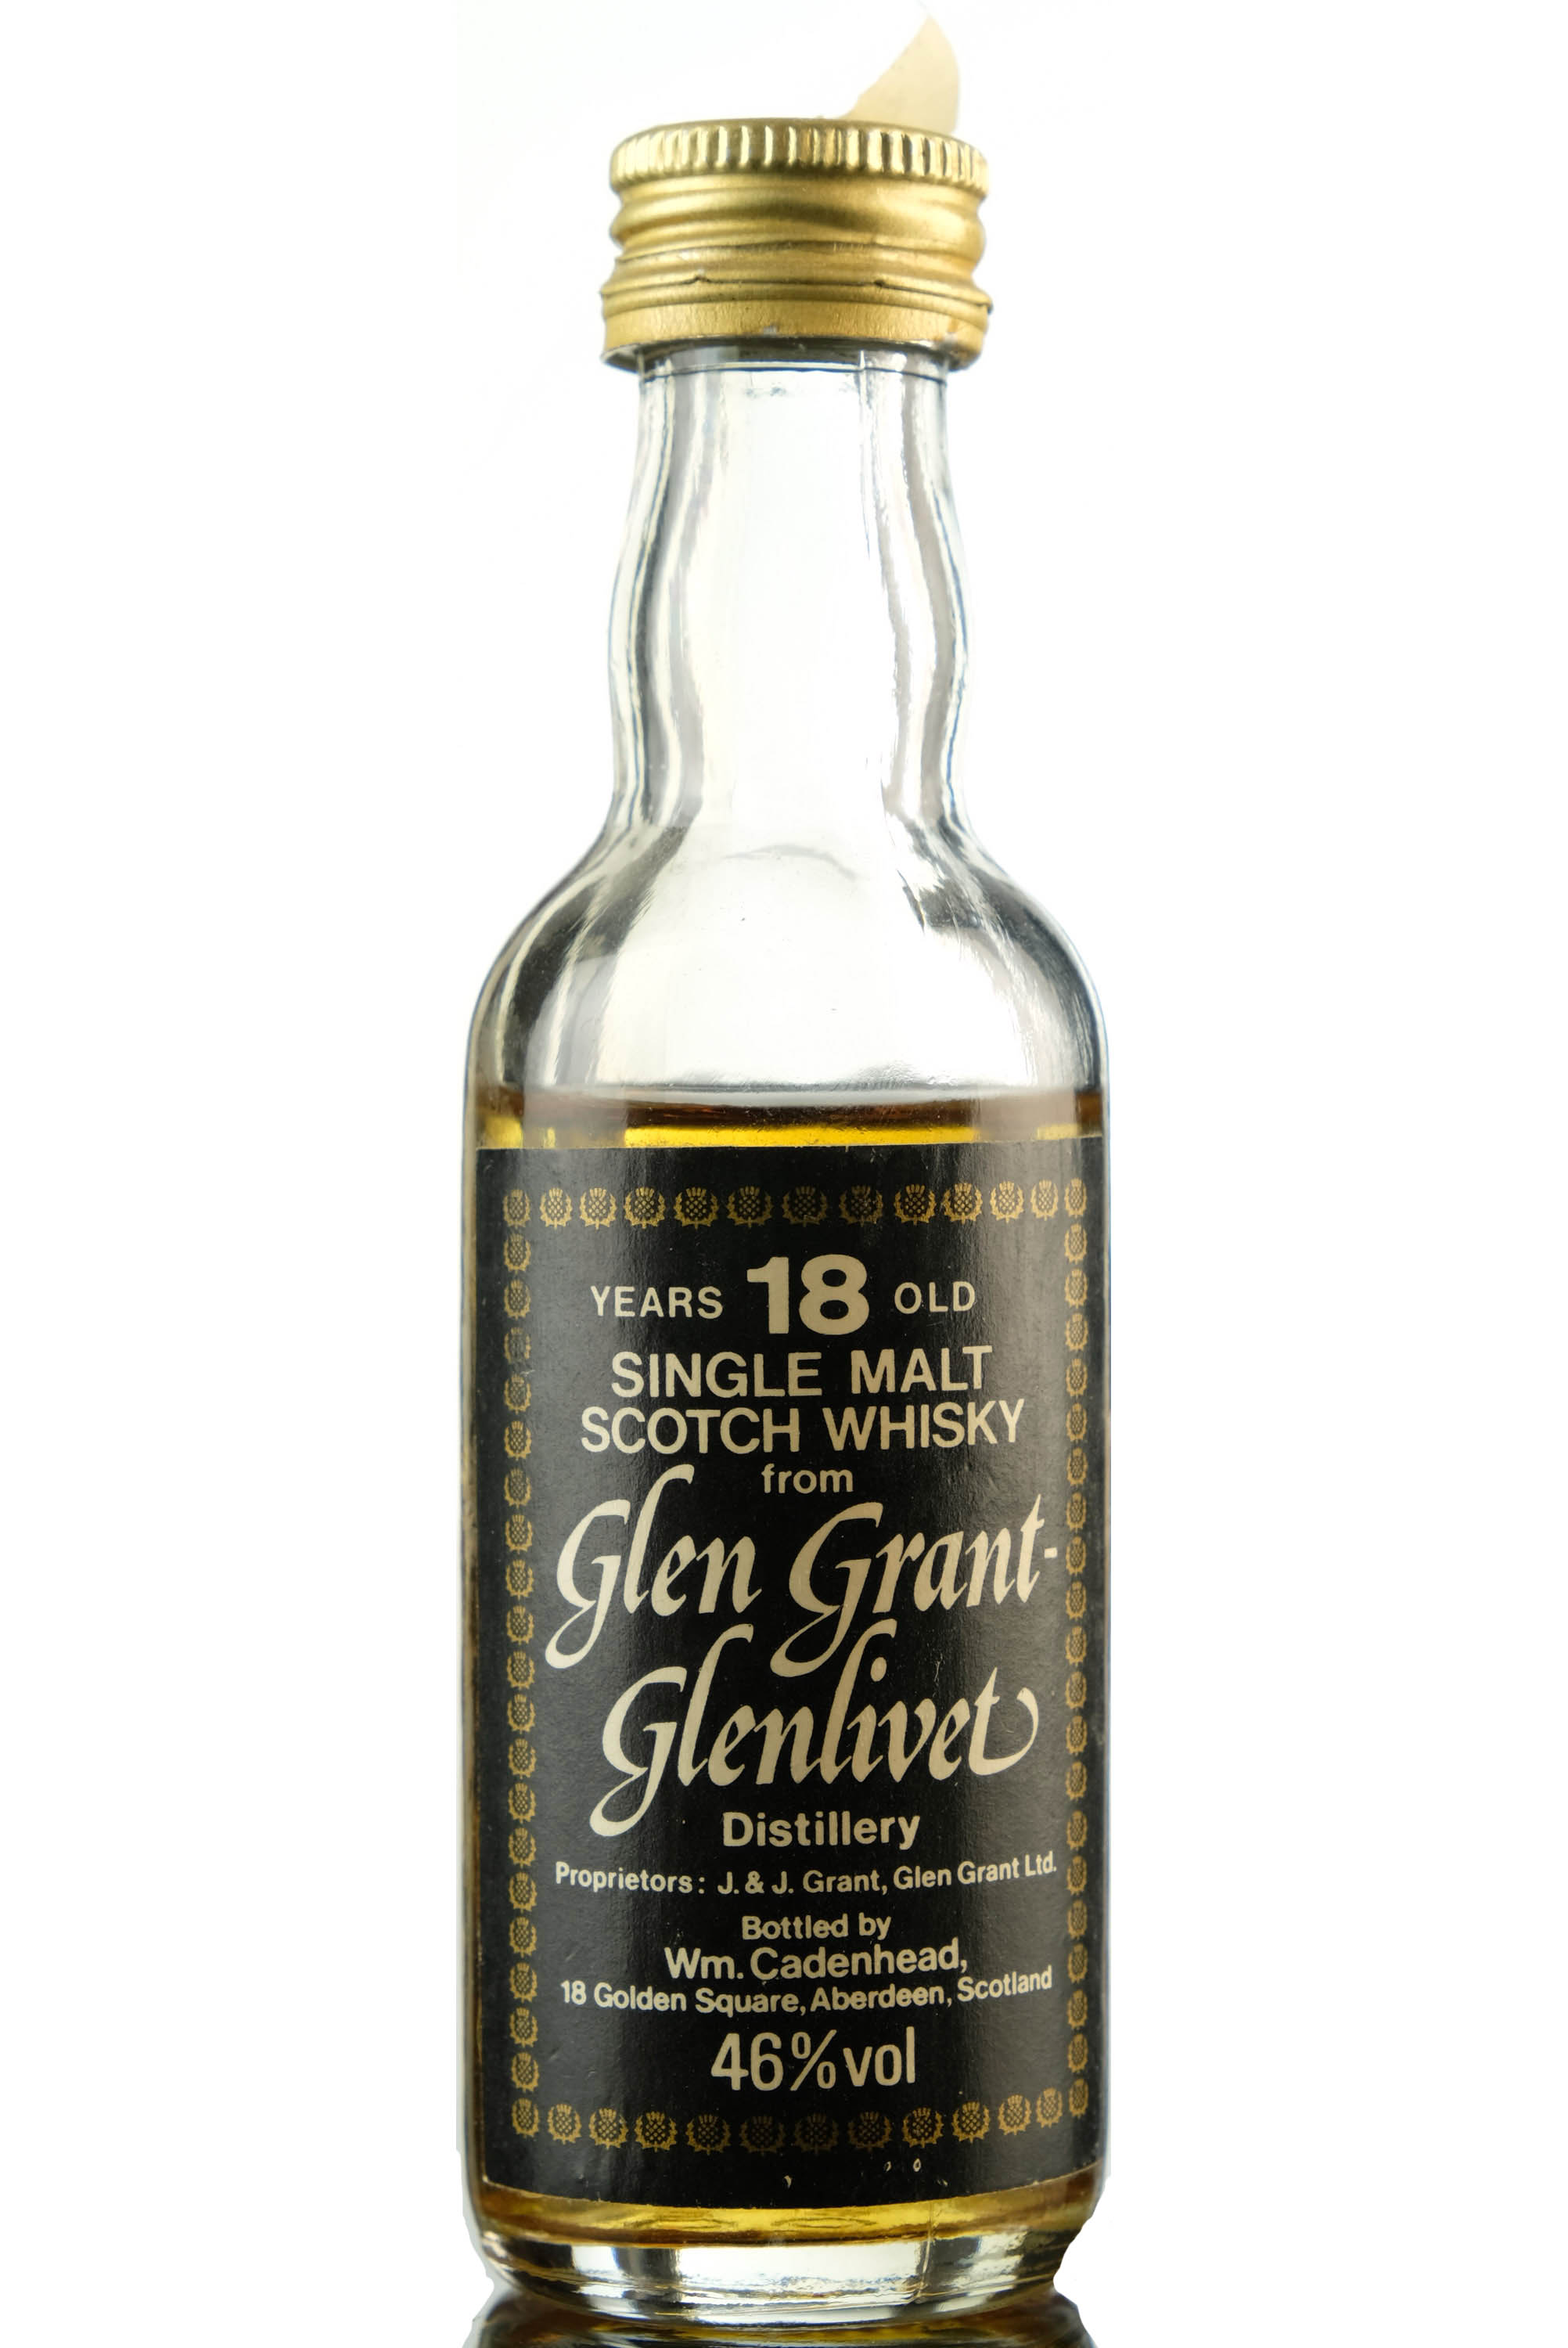 Glen Grant-Glenlivet 18 Year Old - Cadenhead Miniature